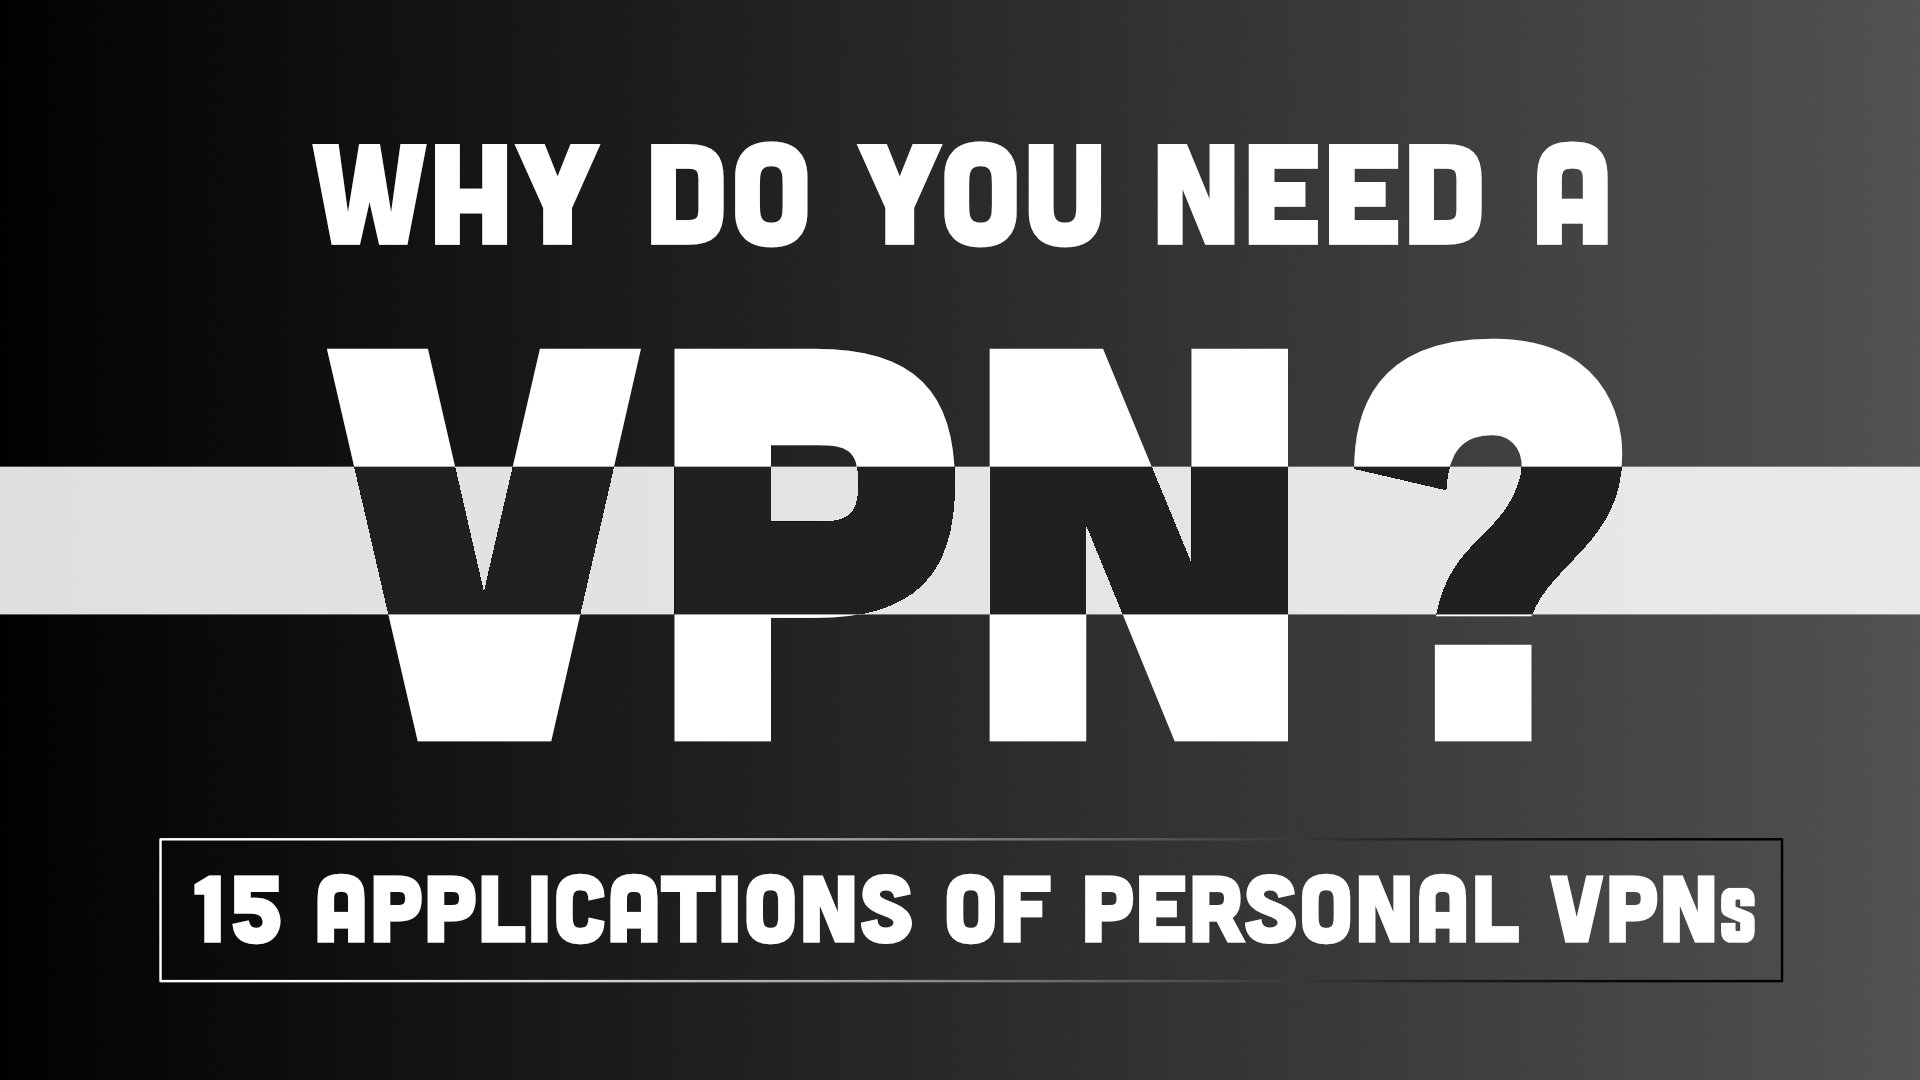 Applications of VPNs